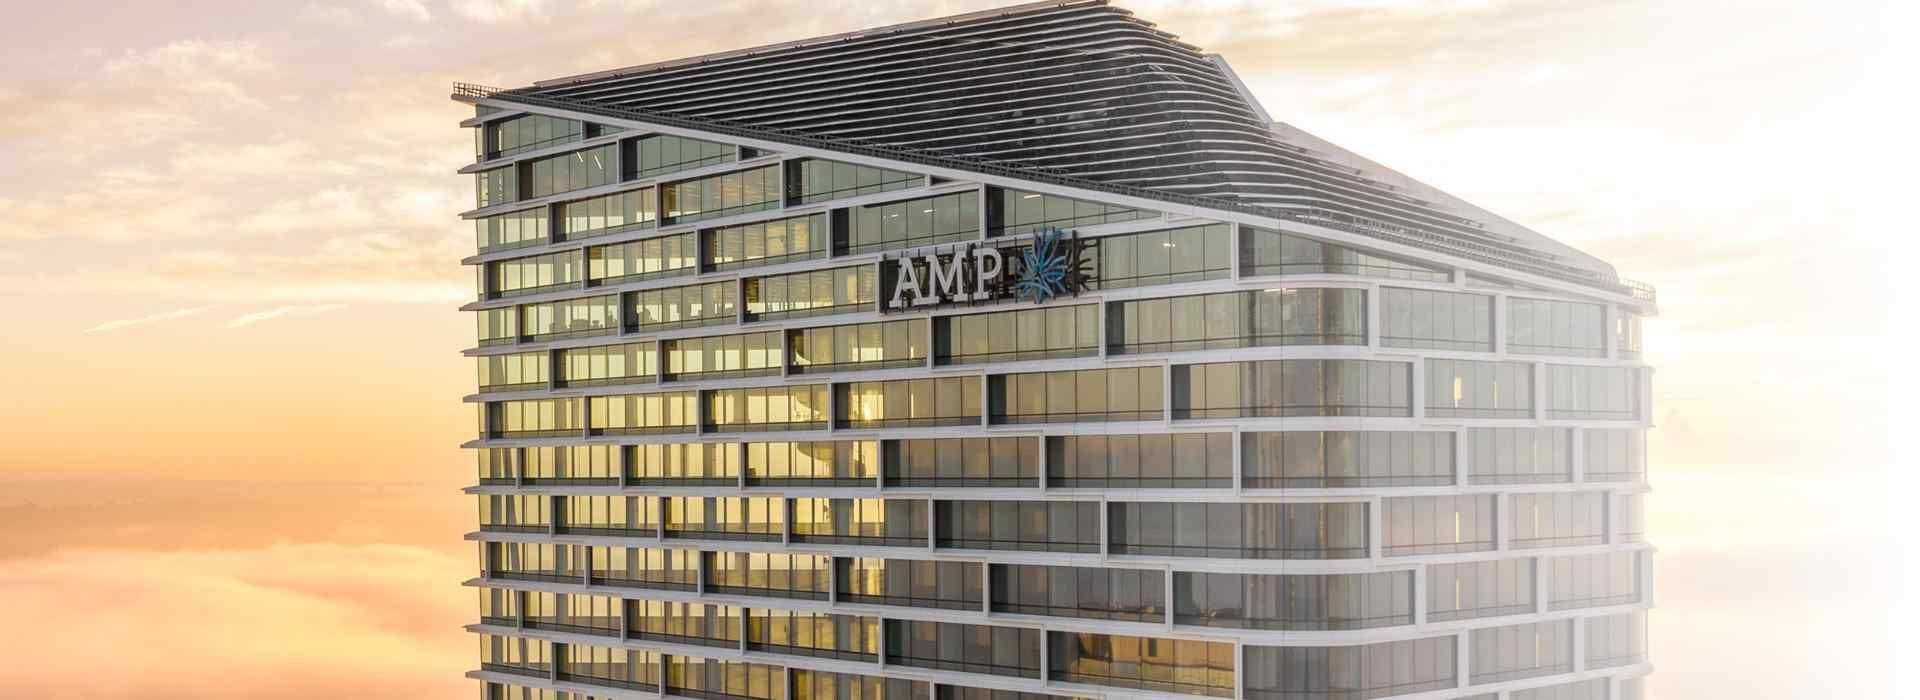 Award Winning AMP Centre in Australia 